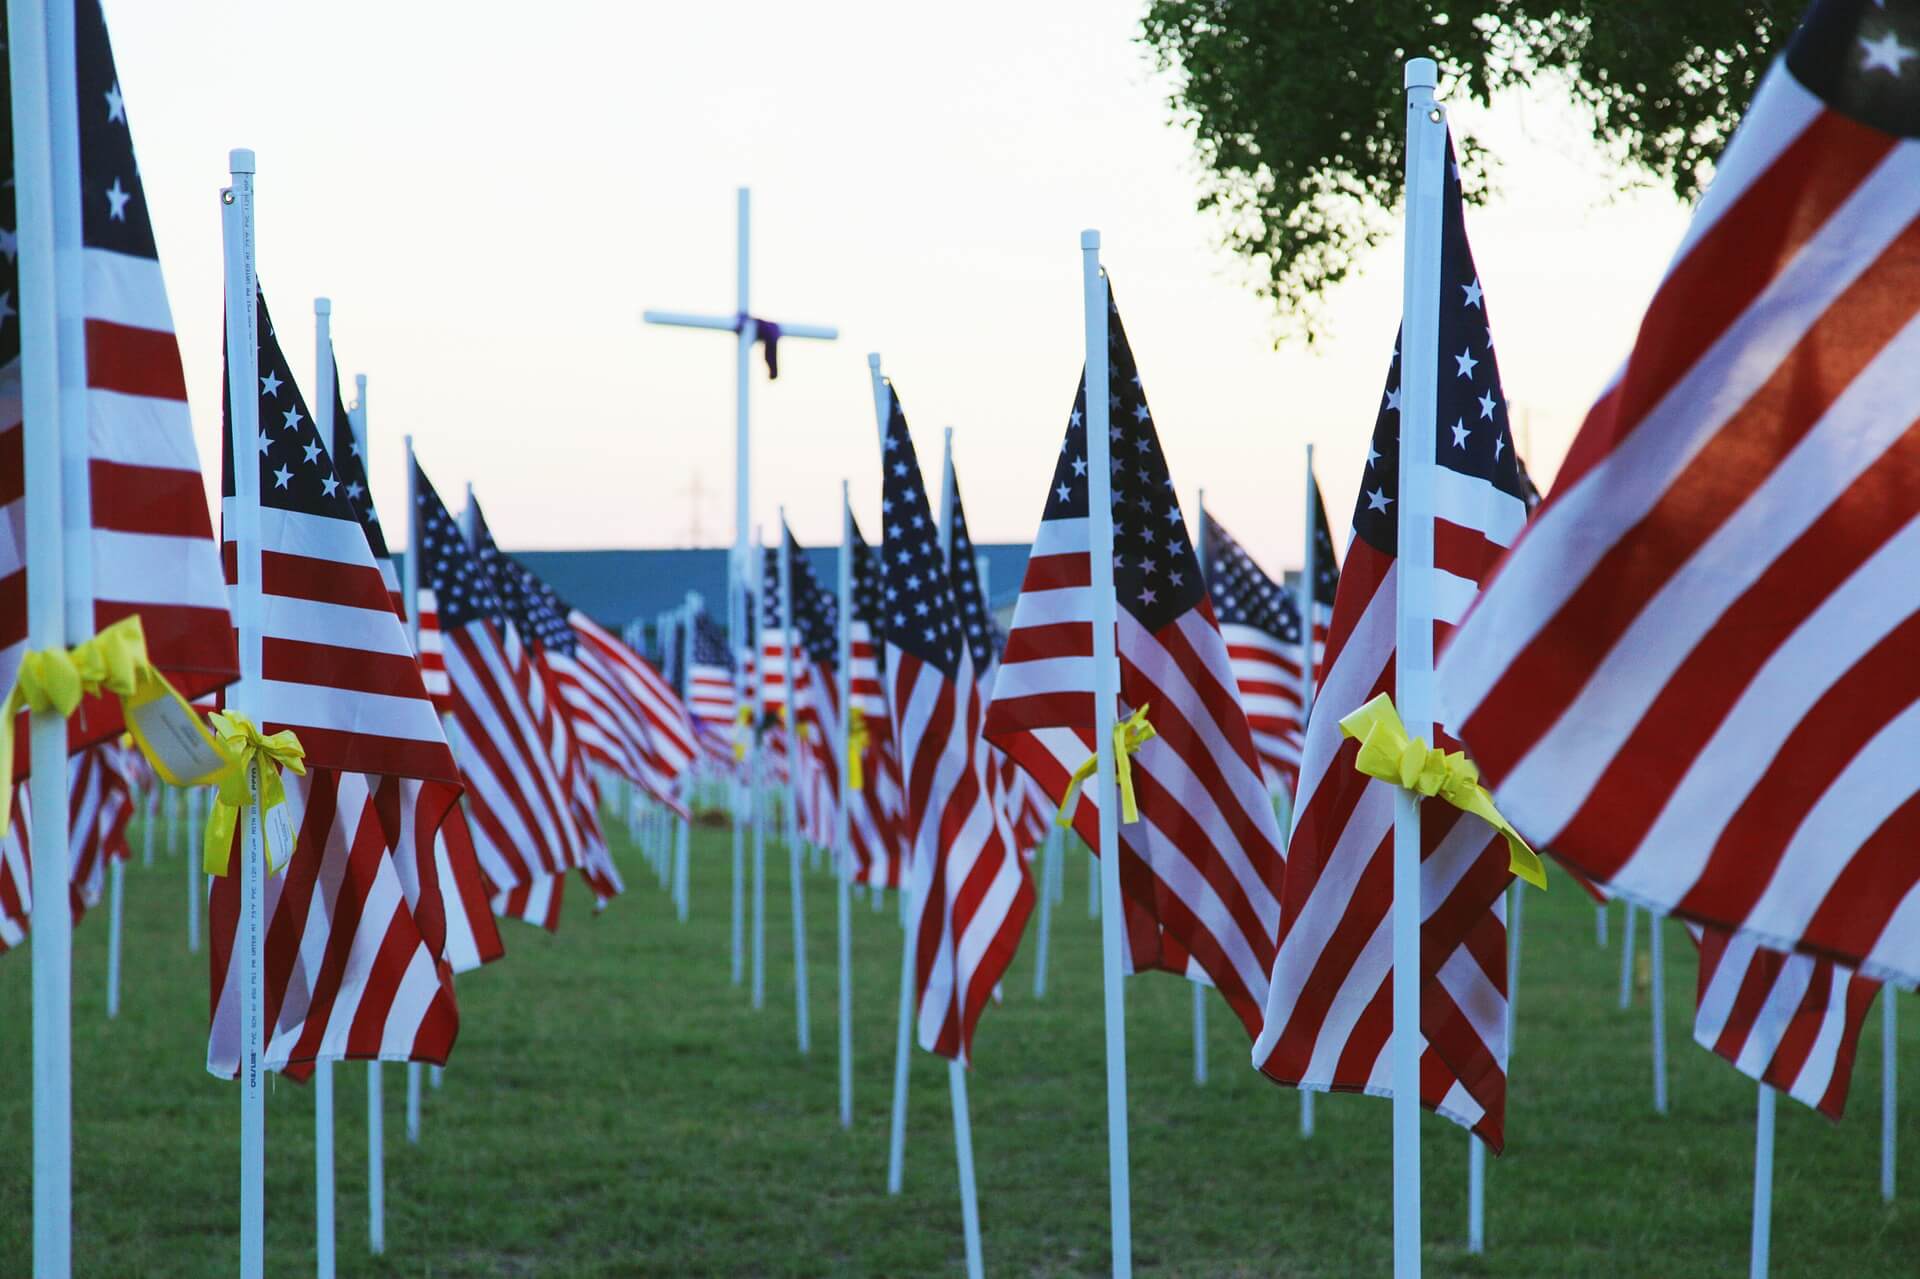 Midwest Veterans Memorial Service